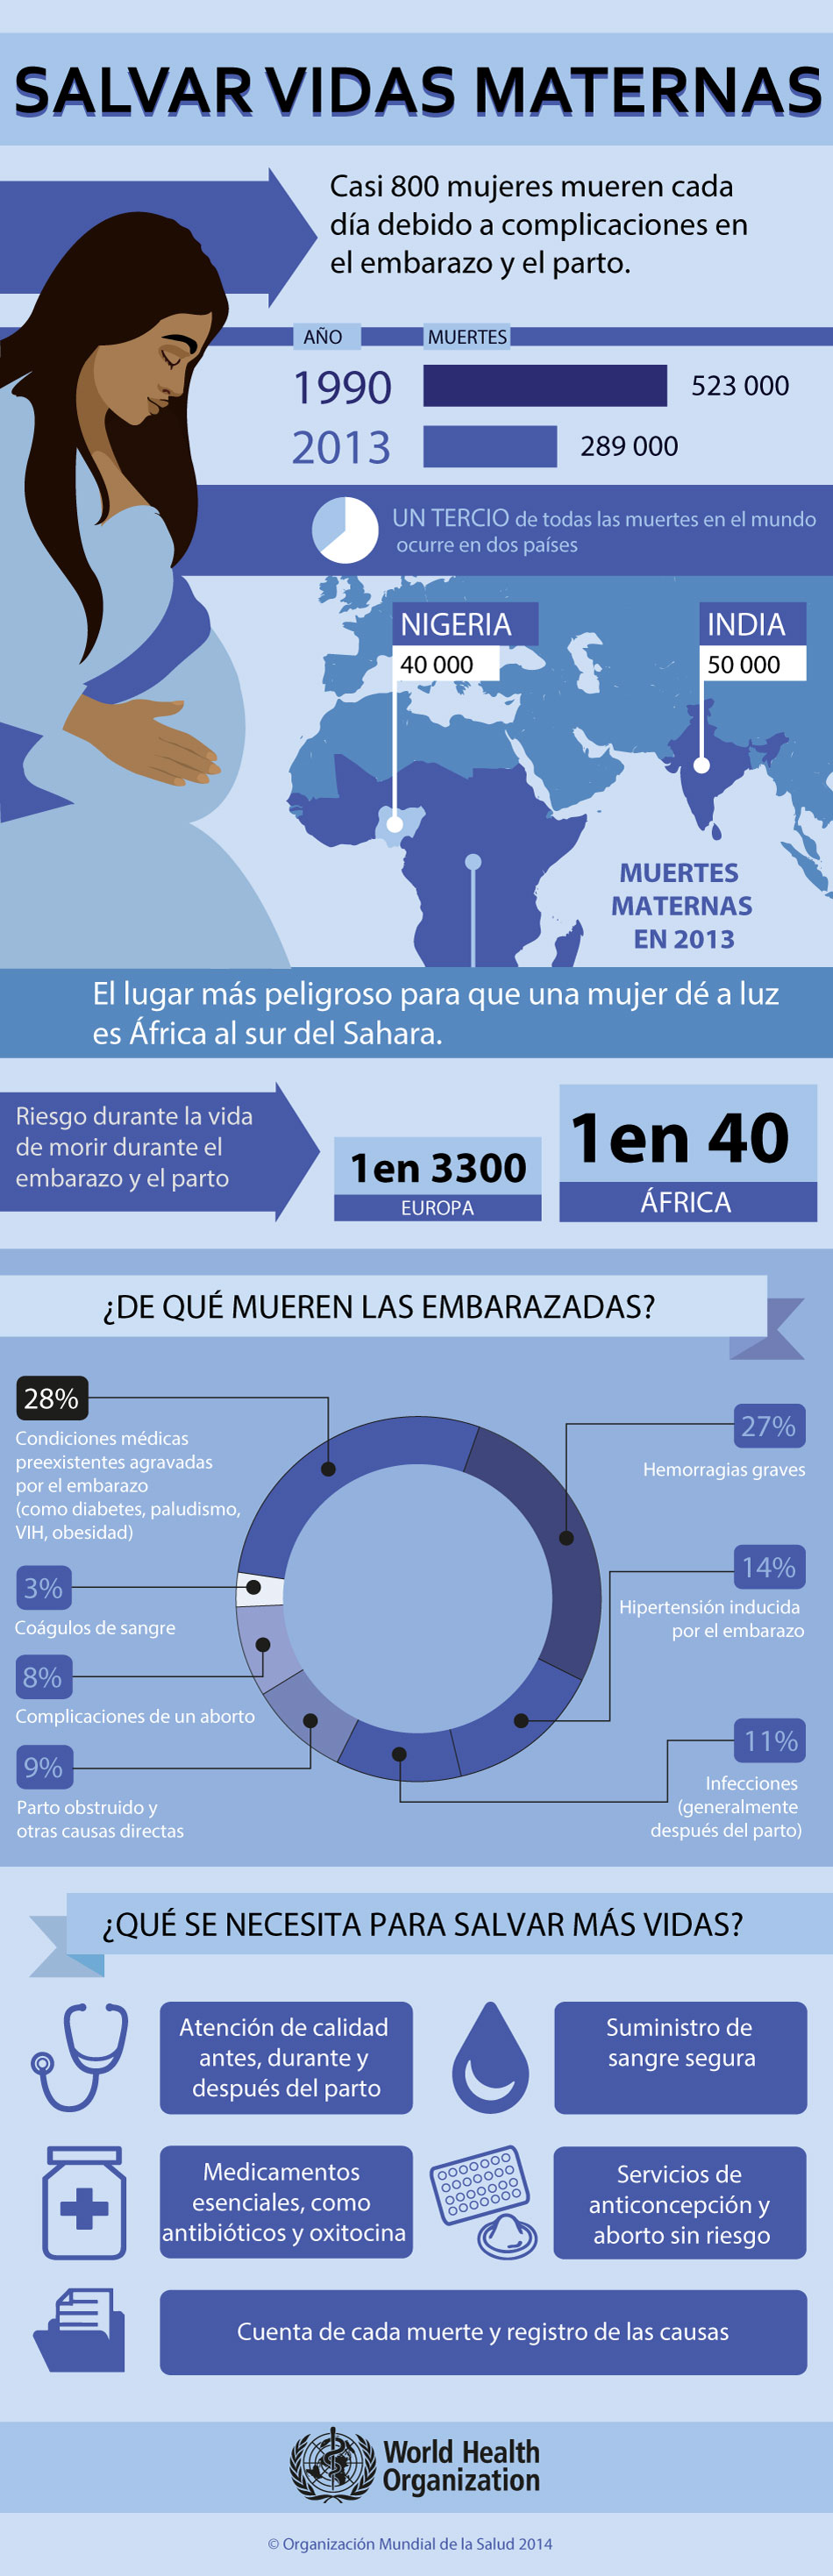 http://www.worldbank.org/content/dam/Worldbank/maternal-health-infographic-spanish.jpg